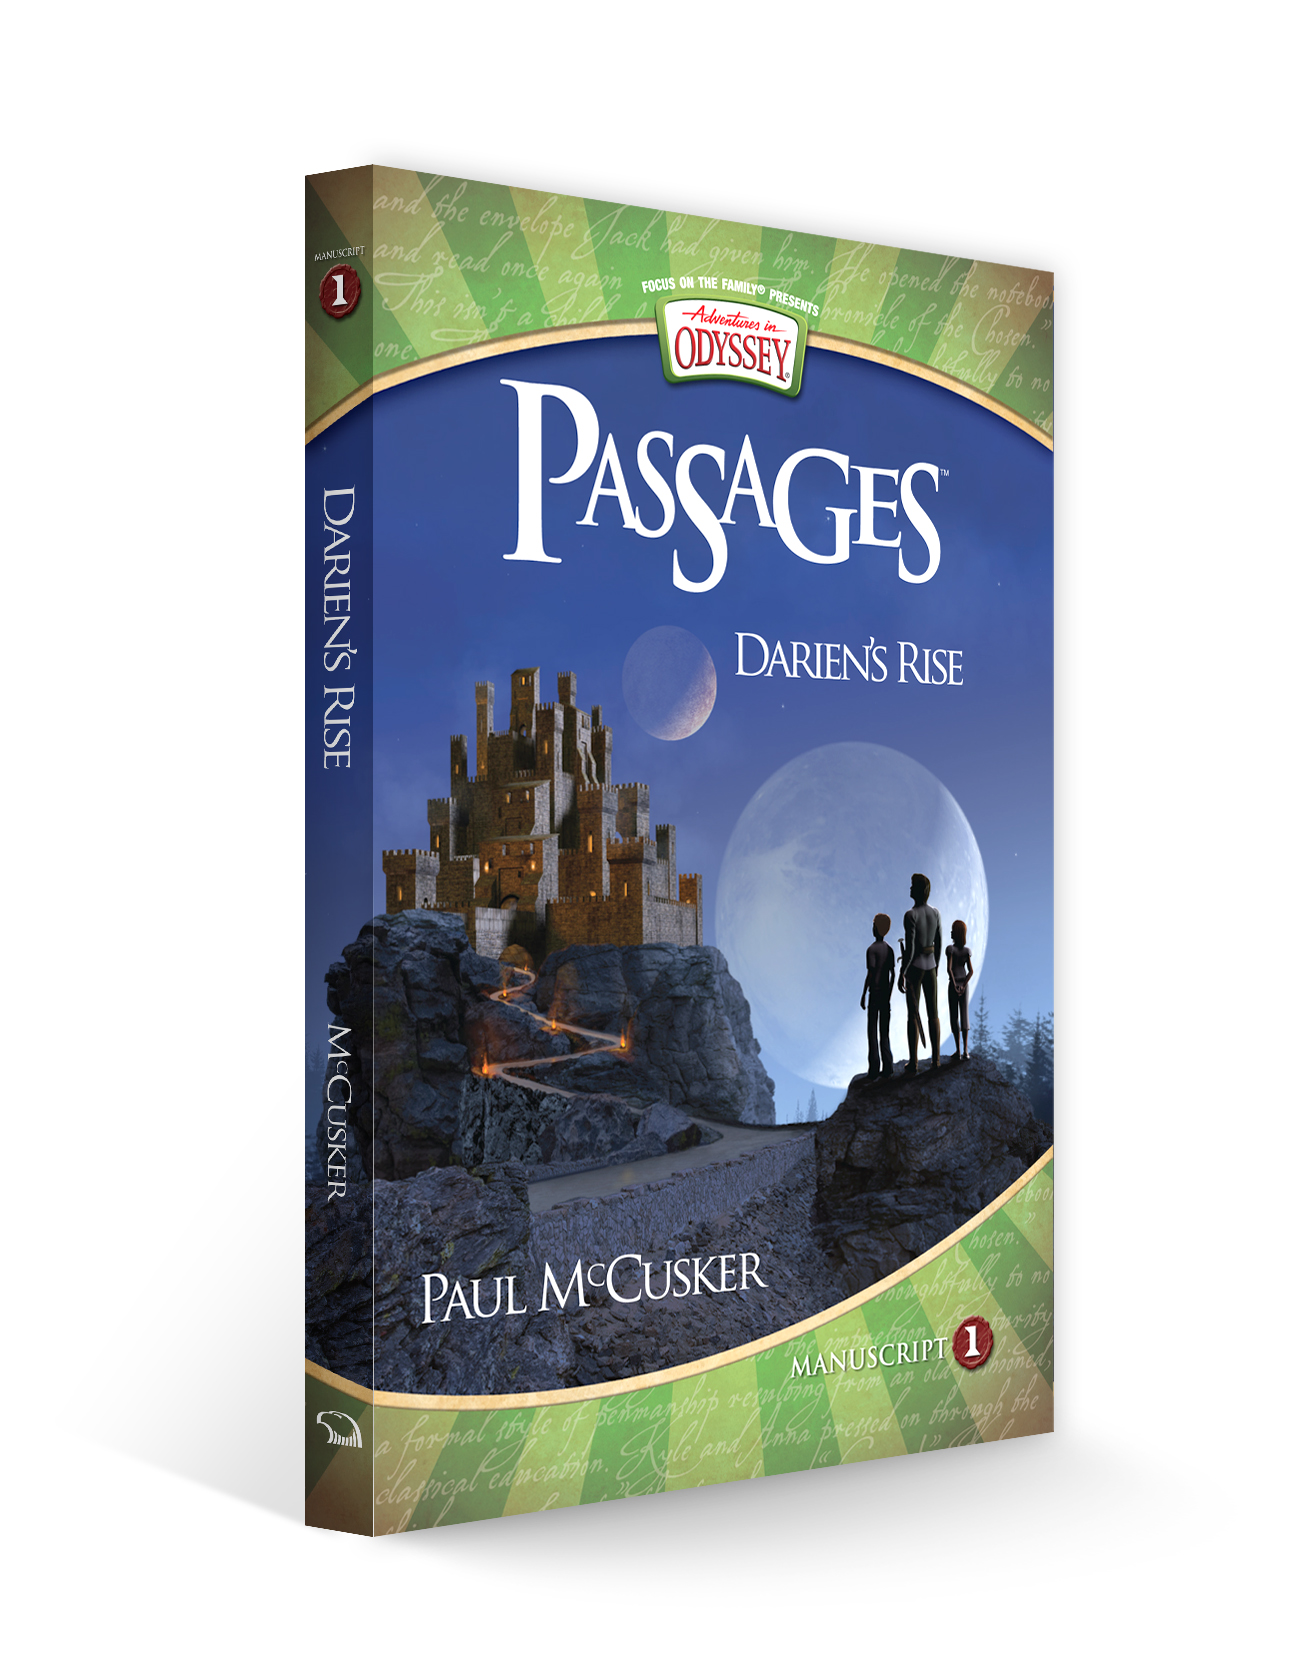 Passages Dariens Rise cover 